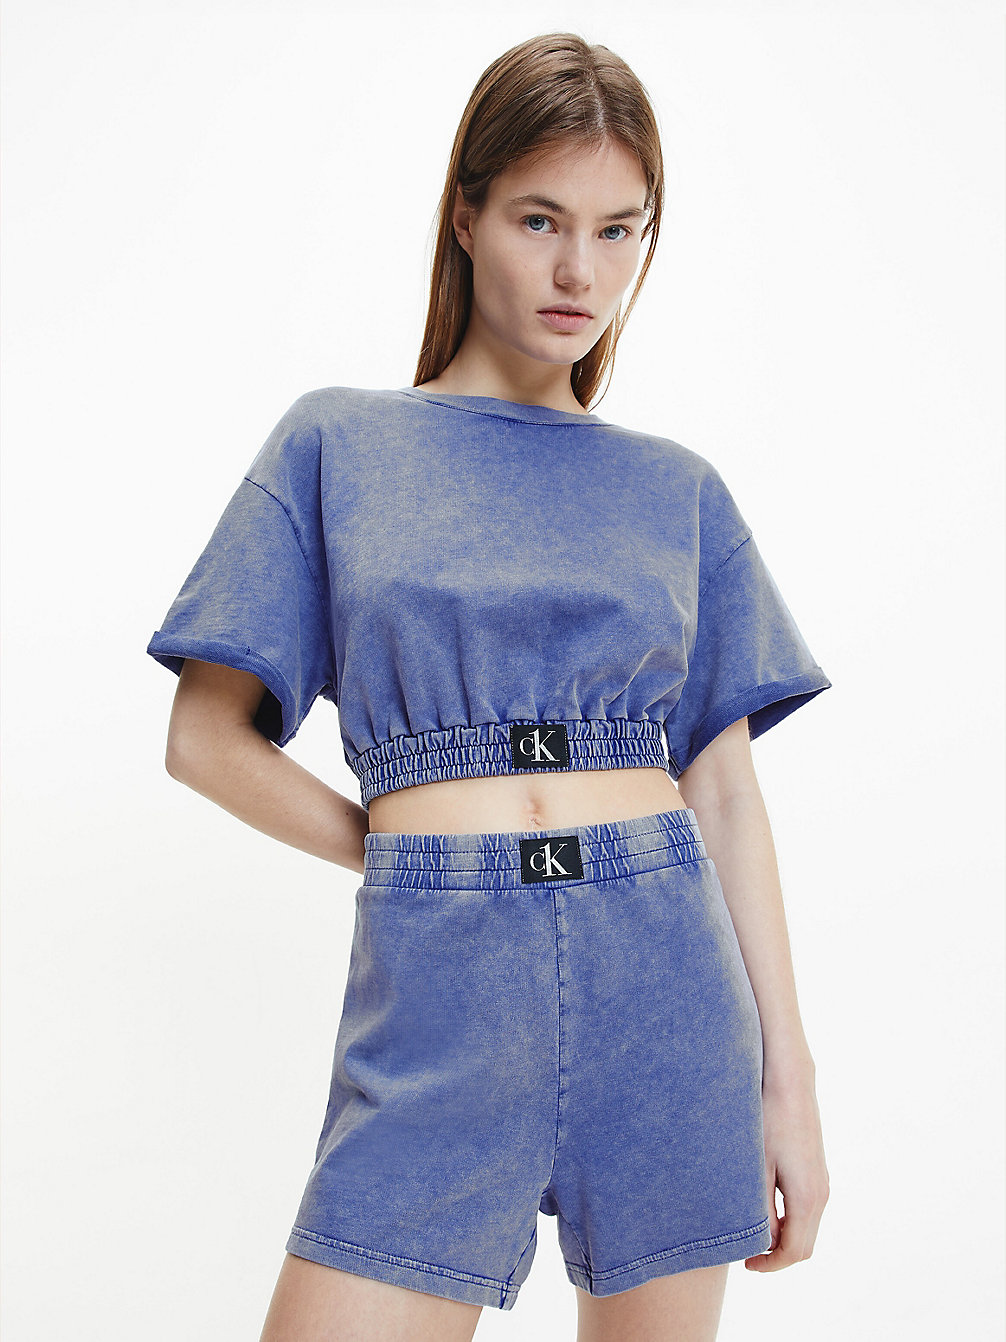 WILD BLUEBELL Cropped Beach T-Shirt - CK Authentic undefined women Calvin Klein